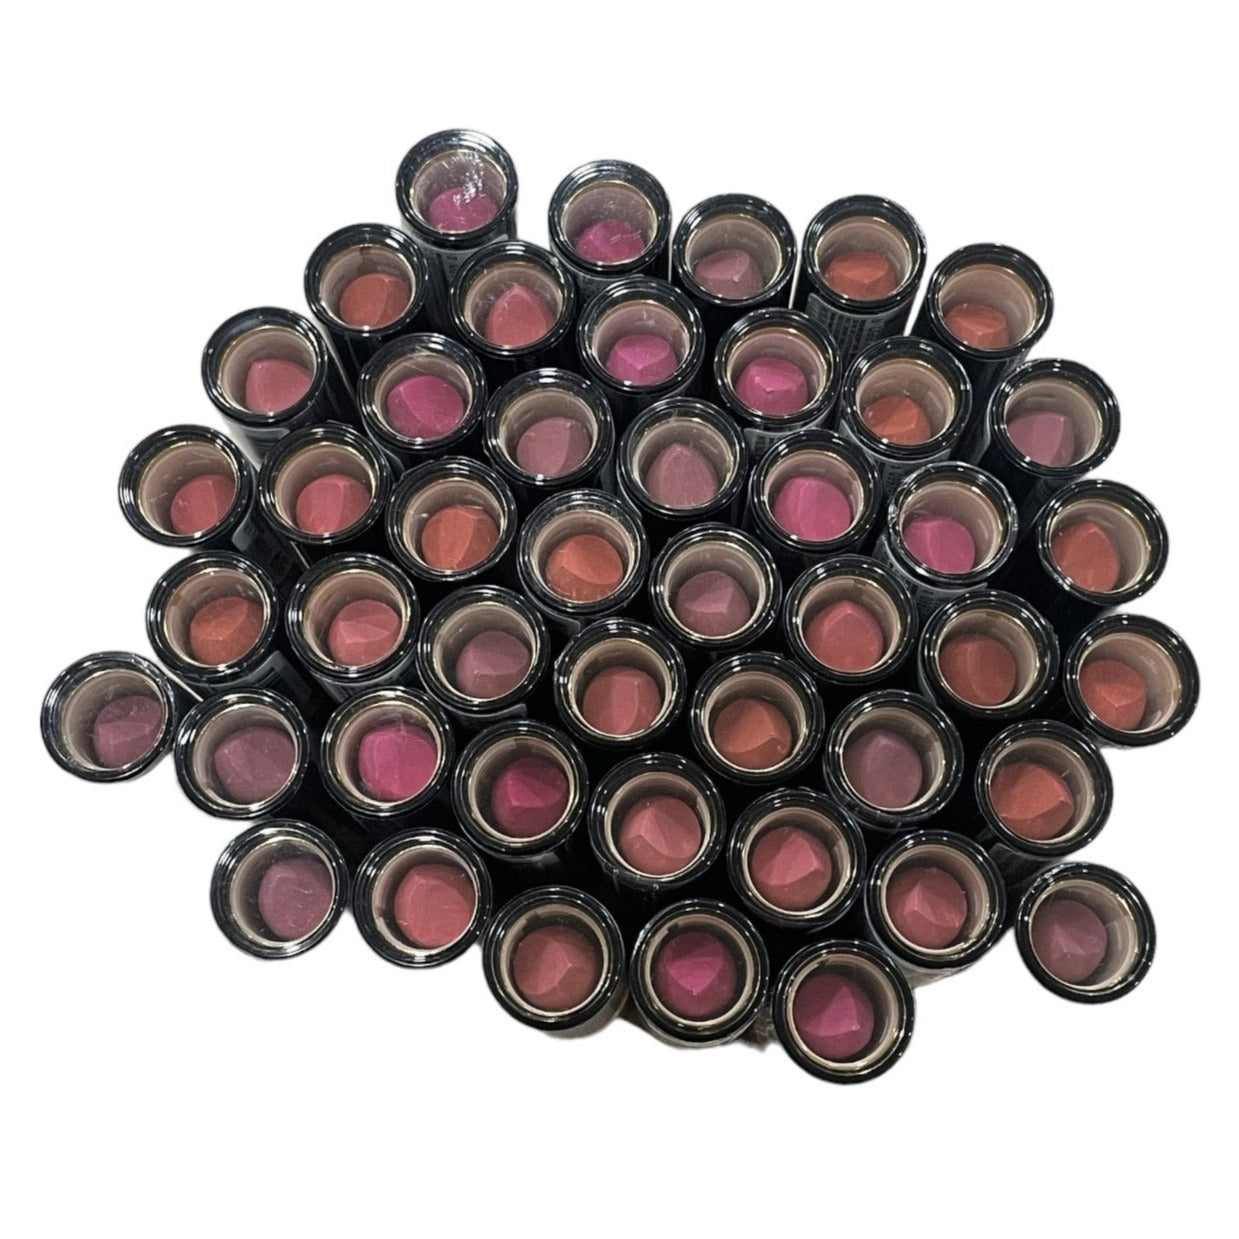 Shelf Pull Makeup - Revlon Super Lustrous Matte Lipstick, Assortment Of 4 Shades - 48 Units cosmetics liquidations overstock wholesale